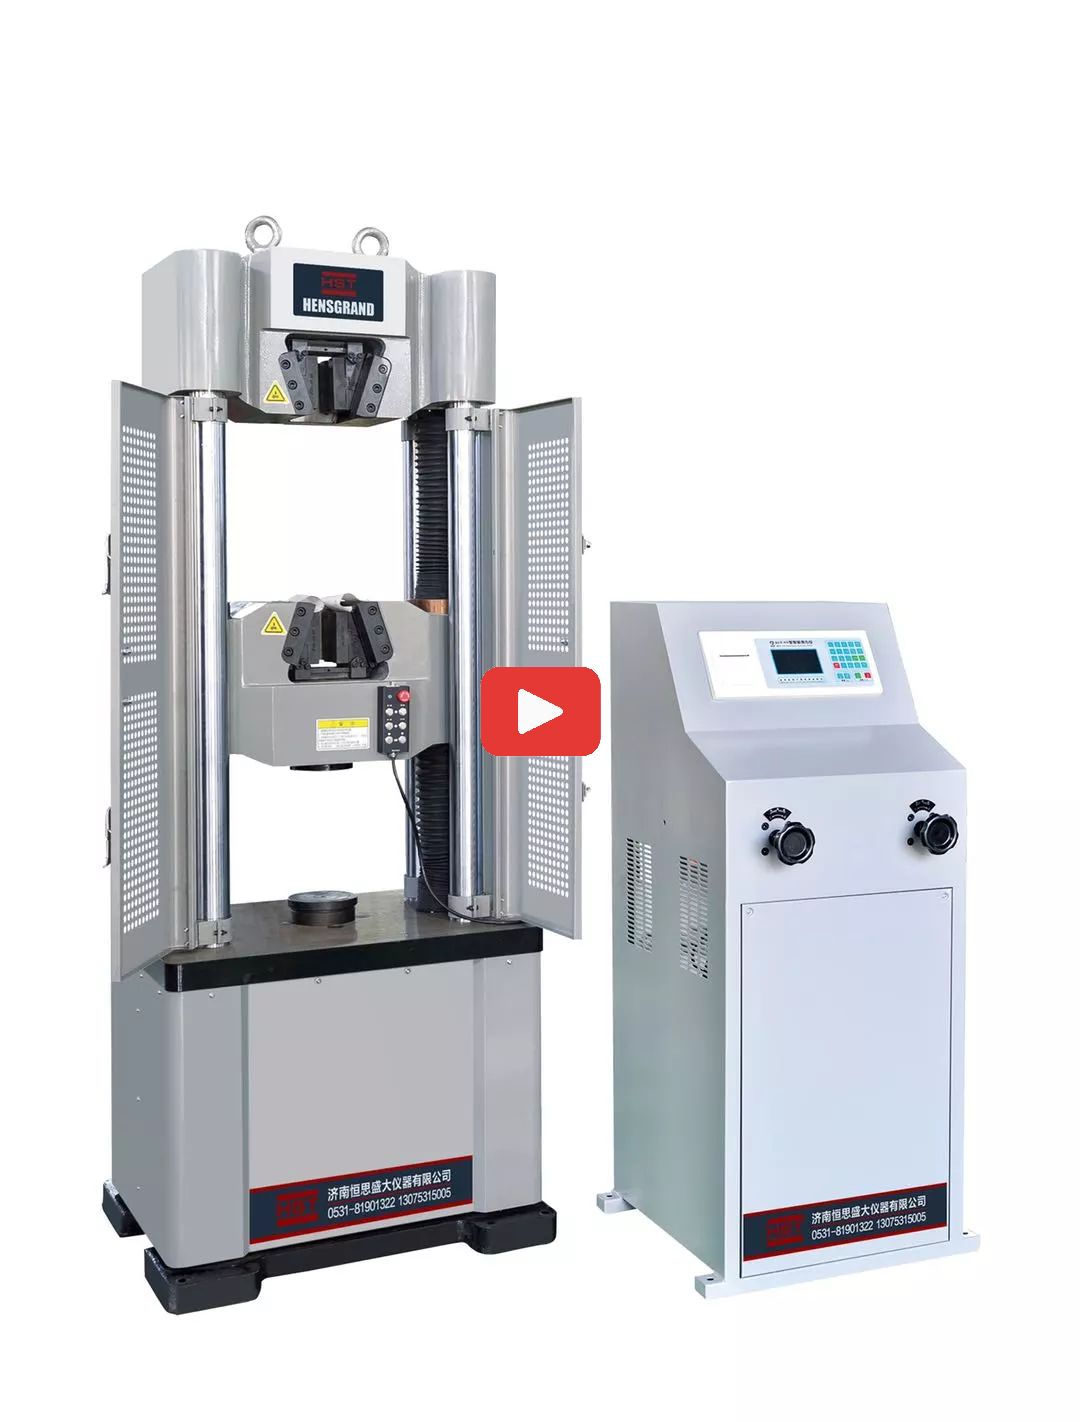 WE-1000D  Digtal display hydraulic universal testing machine